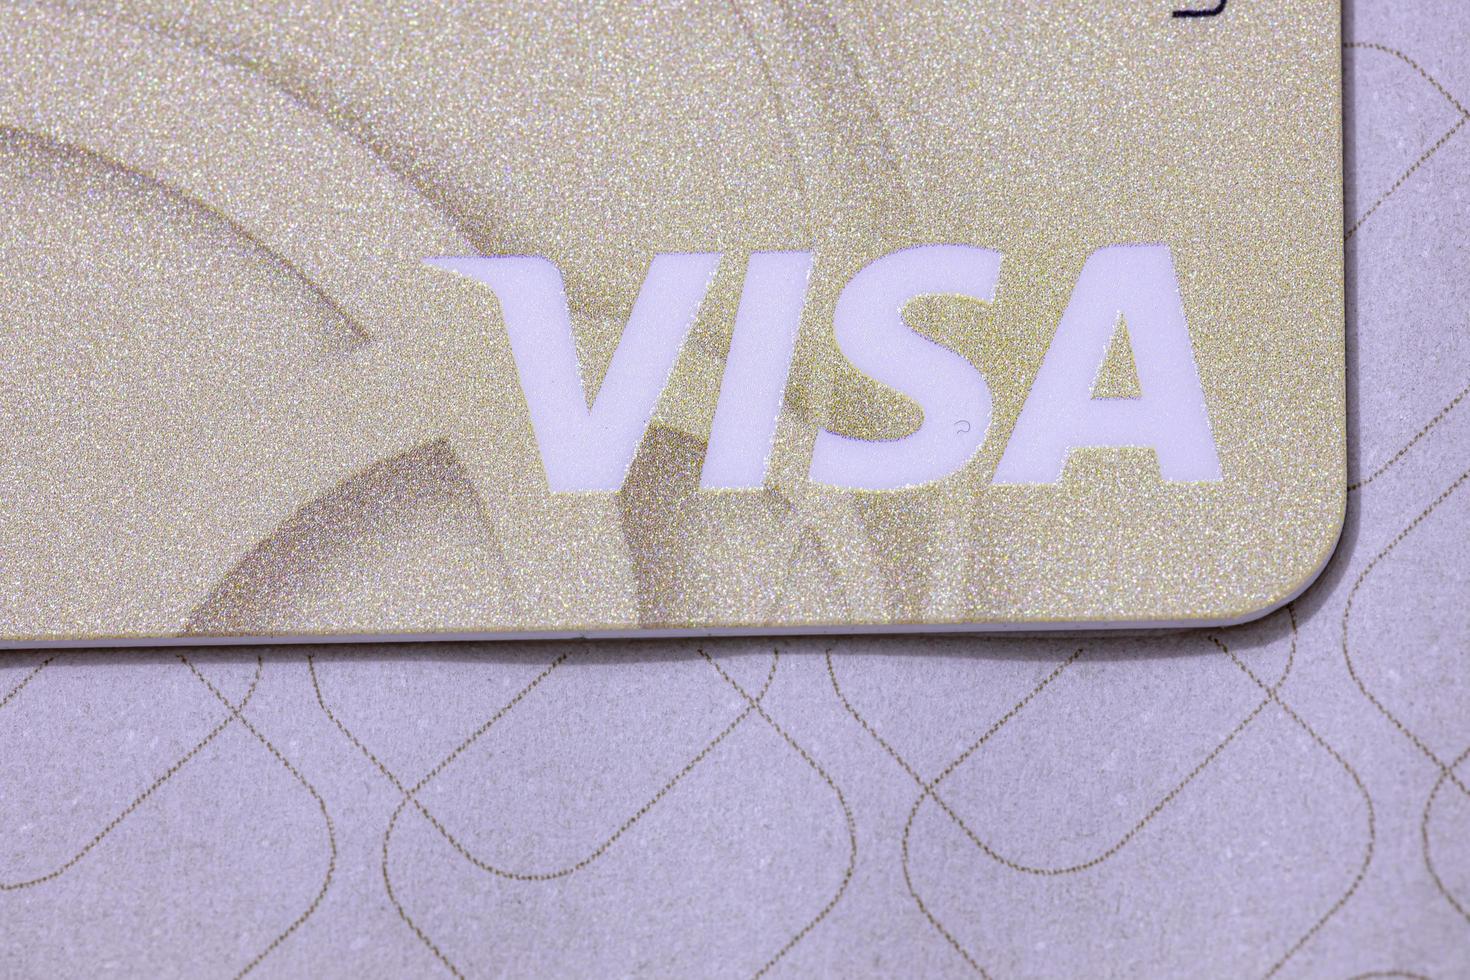 cassilandia, mato grosso do sul, brasil, 2021 -tarjeta de crédito bancaria moderna foto